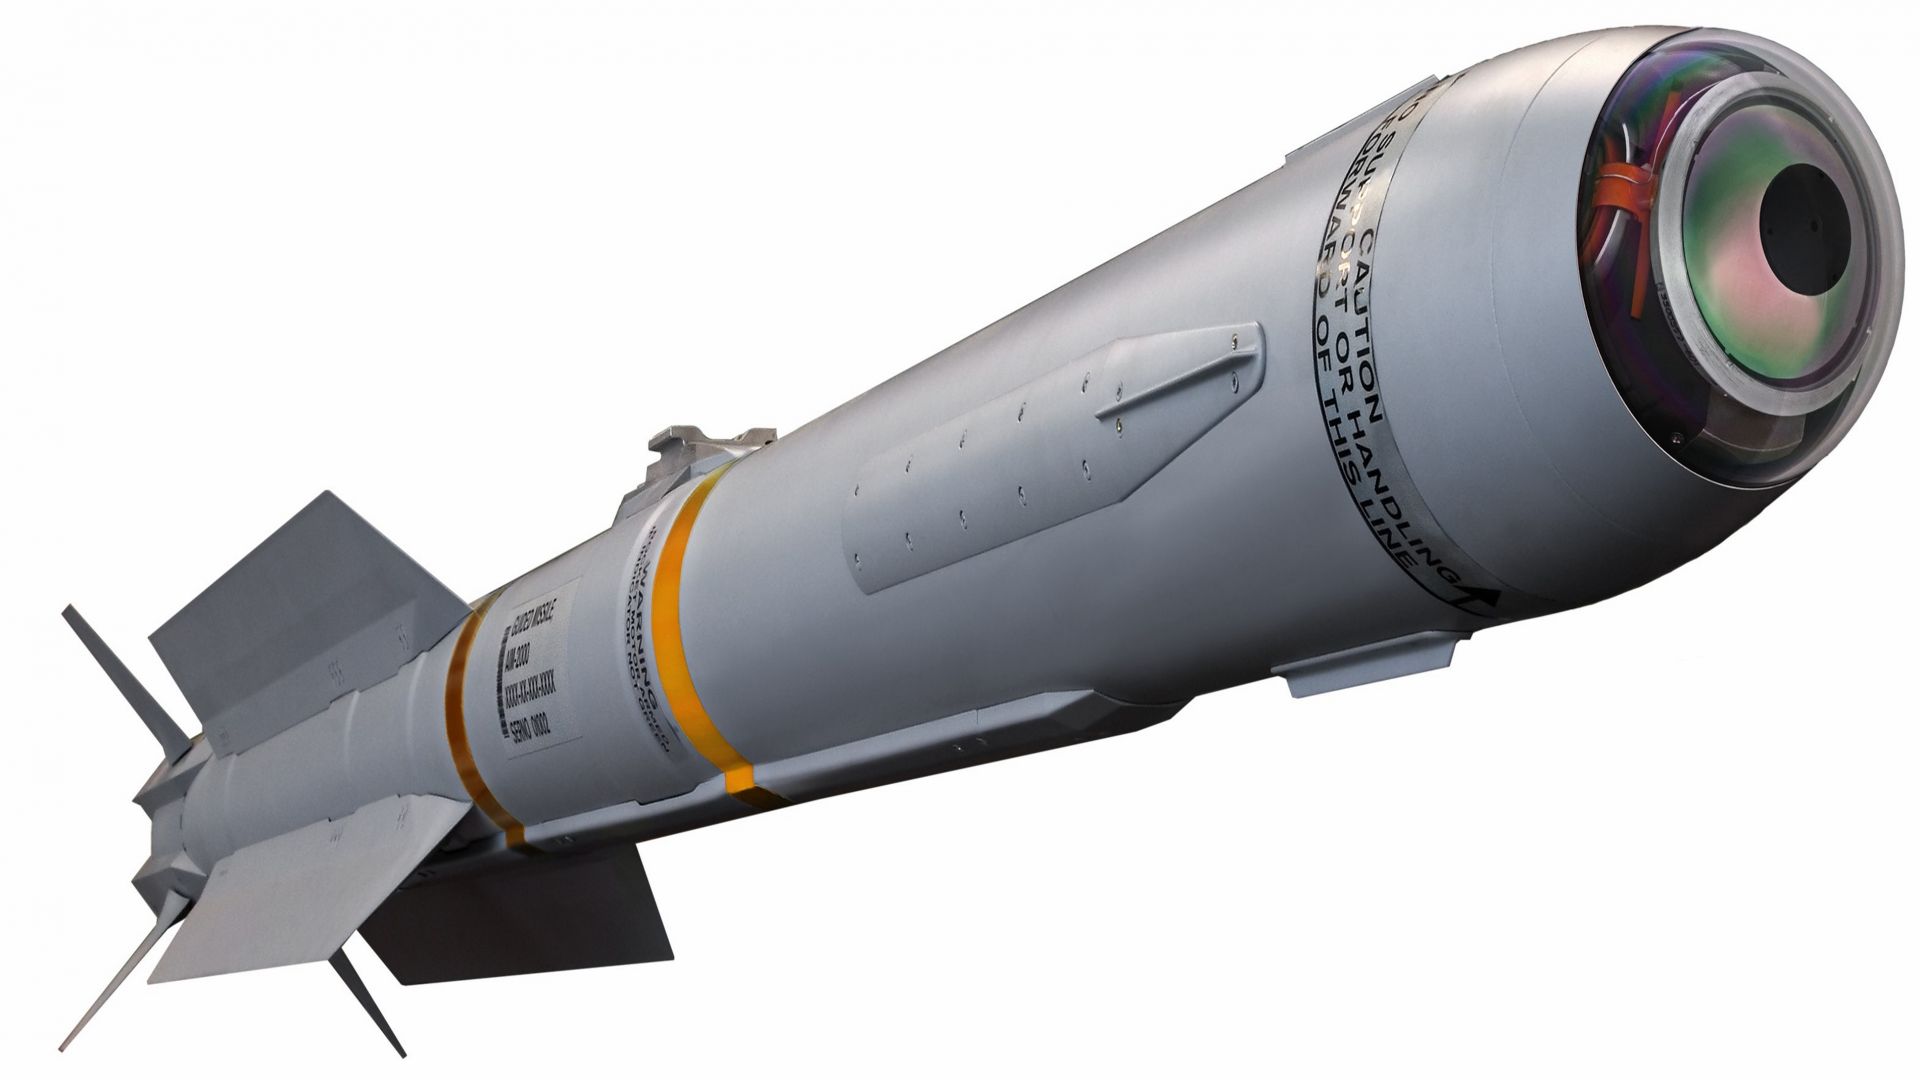 Ирис-Т, ракета, Еврофайтер Тайфун, IRIS-T, rocket, Eurofighter Typhoon,  (horizontal)